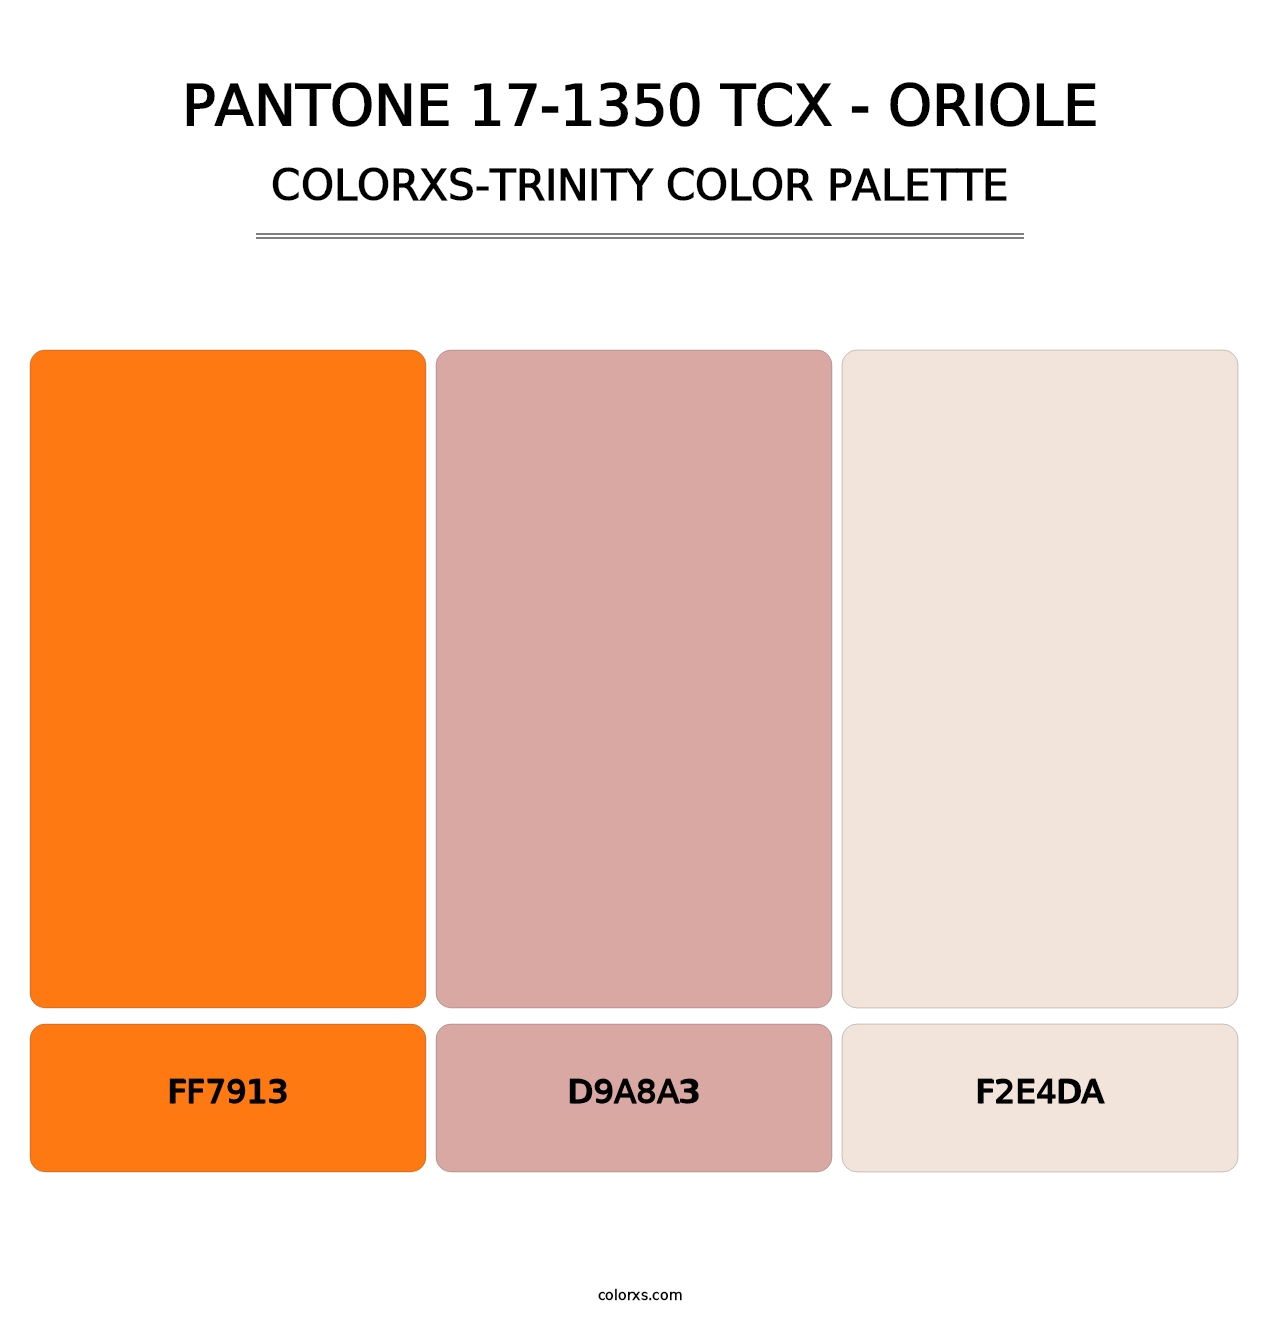 PANTONE 17-1350 TCX - Oriole - Colorxs Trinity Palette